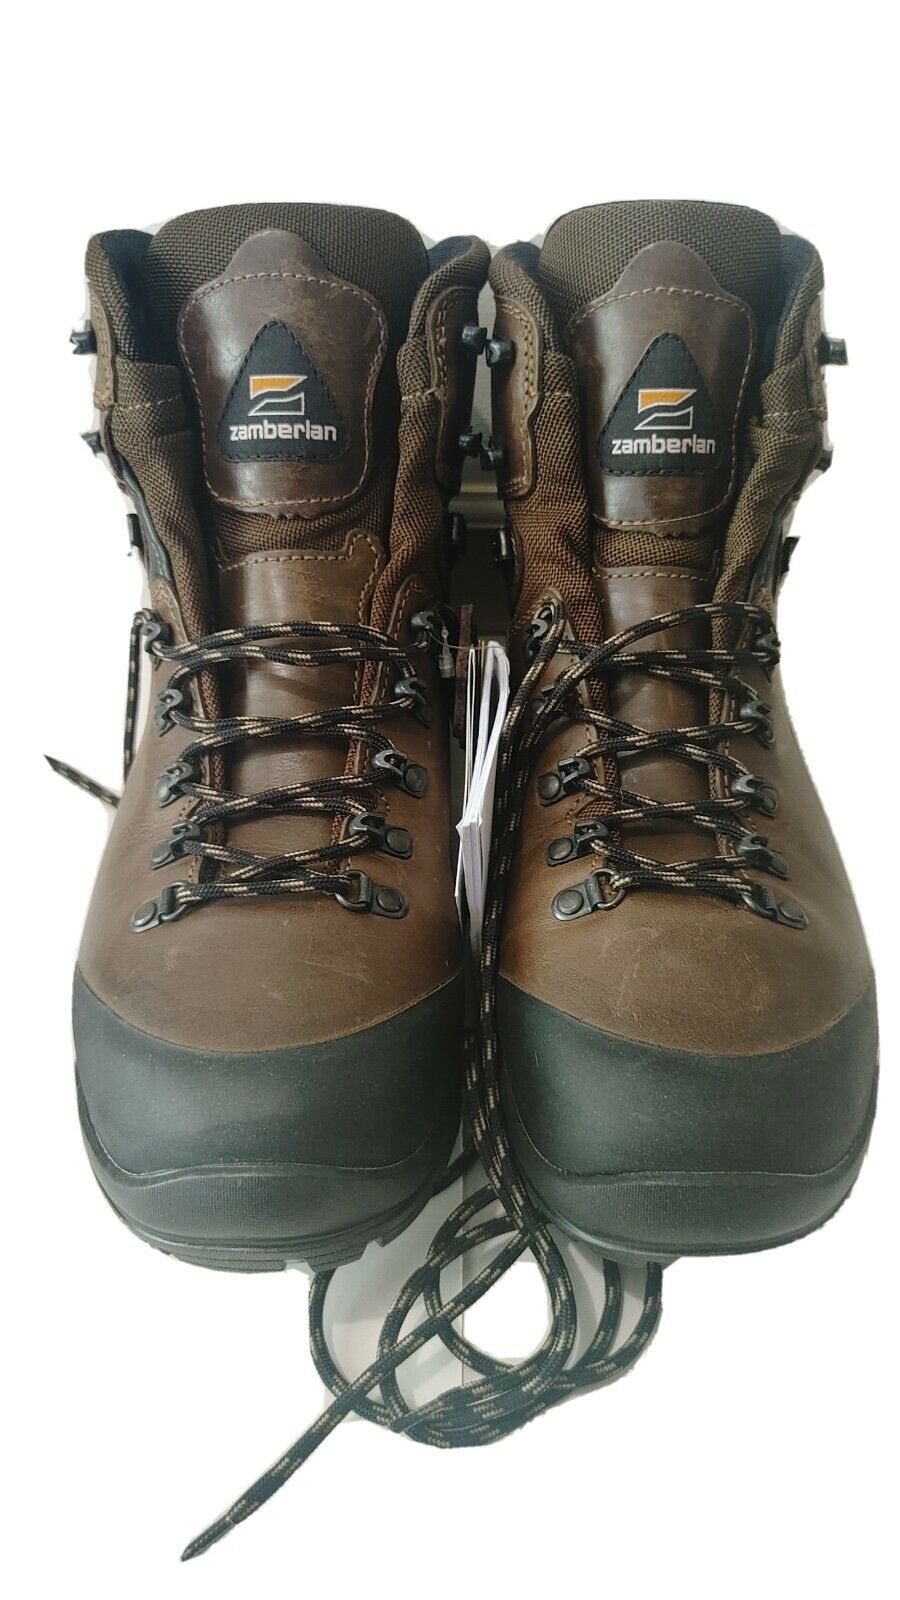 Zamberlan Vioz Hike GTX RR Waxed Chestnut Men’s 11 1/2/46EU Hiking Trail Boots